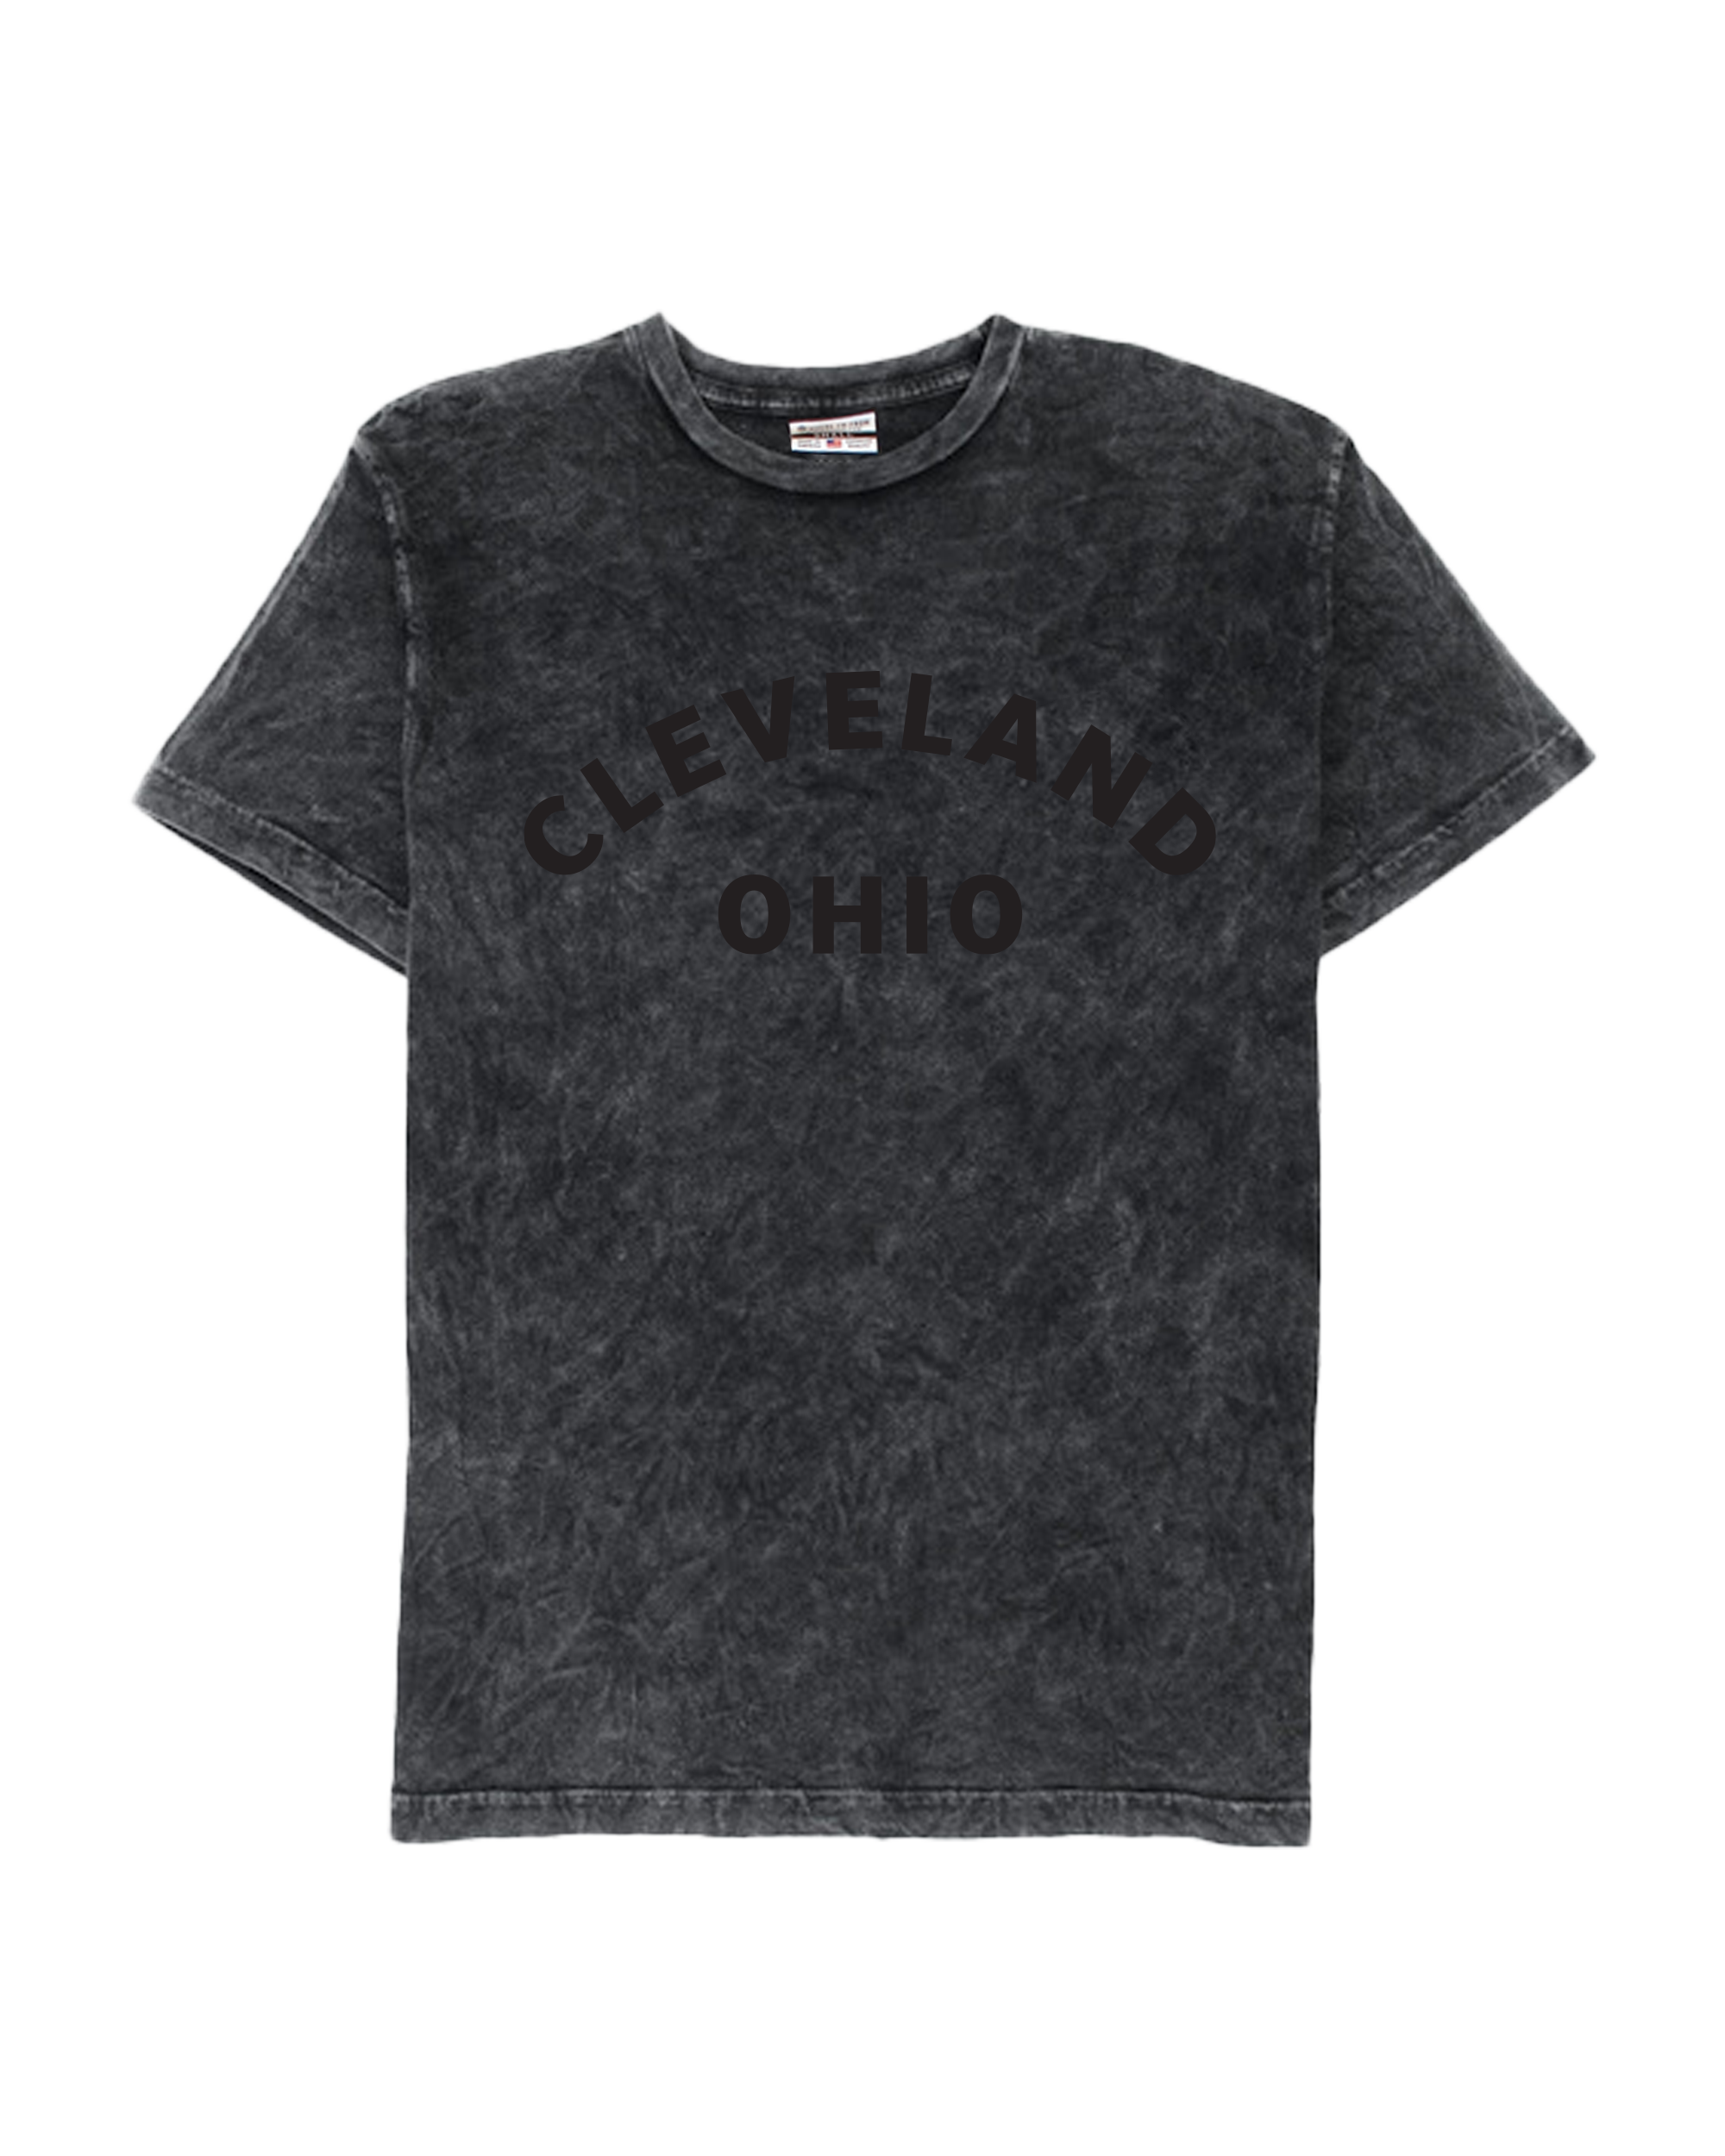 Cleveland Ohio Mineral Wash Crew T-Shirt